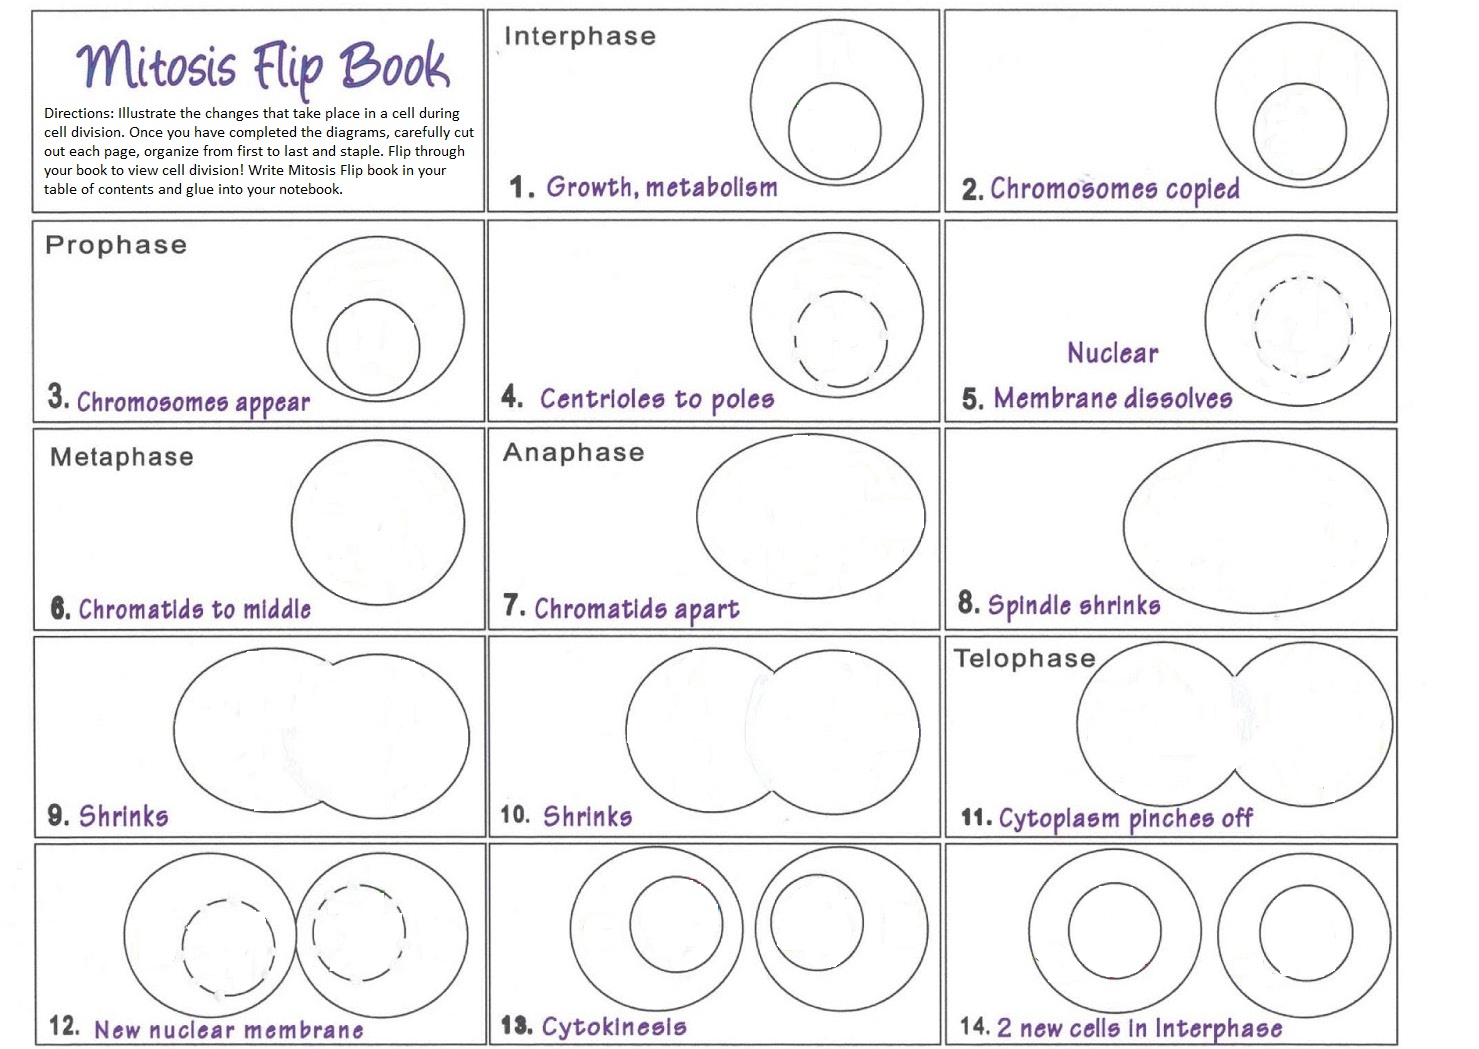 flipbook mitosis